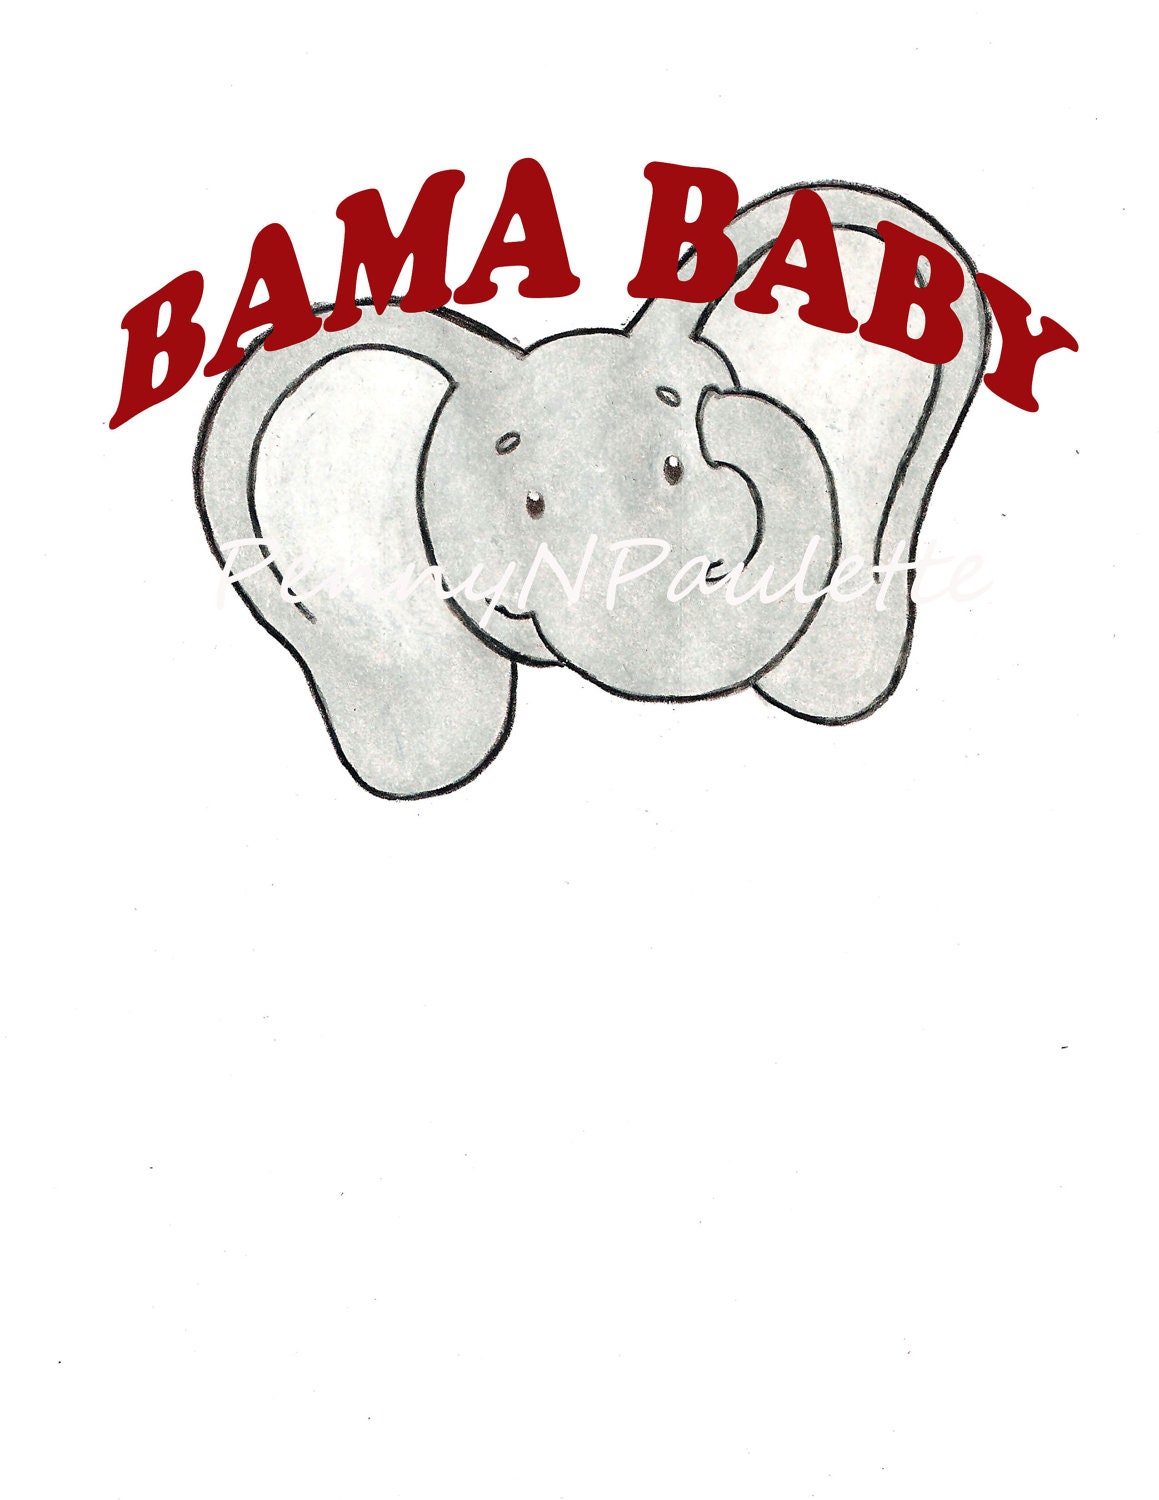 Alabama crimson tide "Bama baby"childrens babies printed tshirt custom made to order sizes 0-3 months-5T OOAK original hand drawn designs